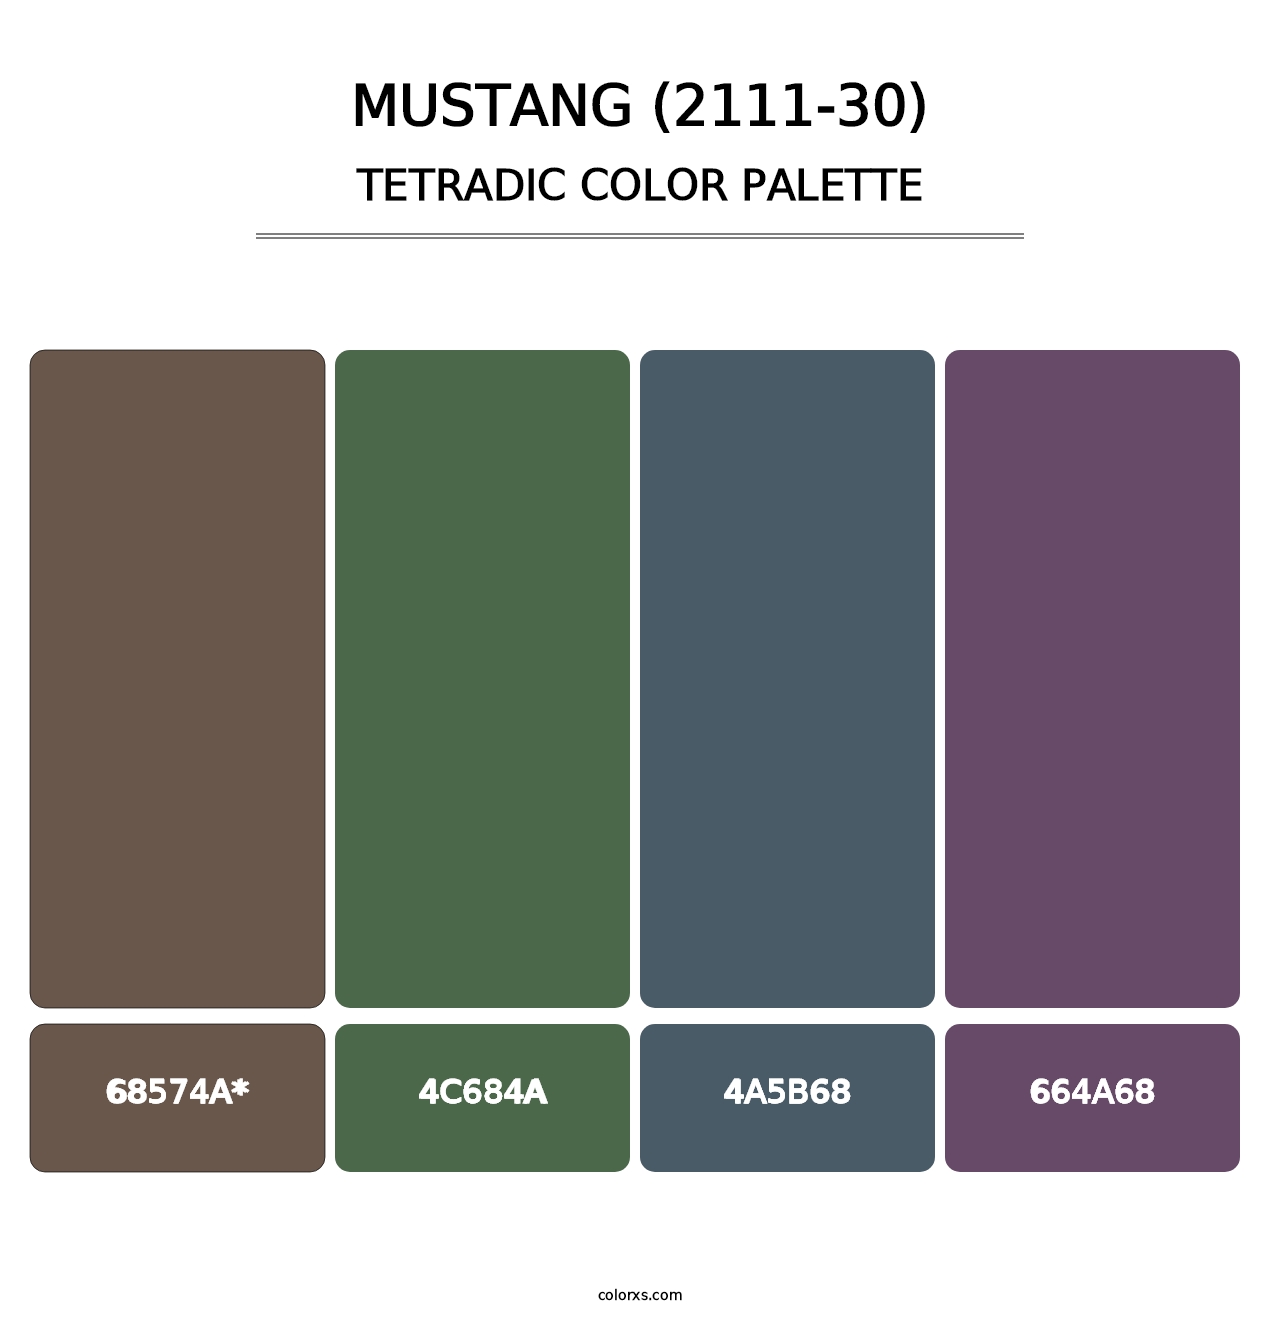 Mustang (2111-30) - Tetradic Color Palette